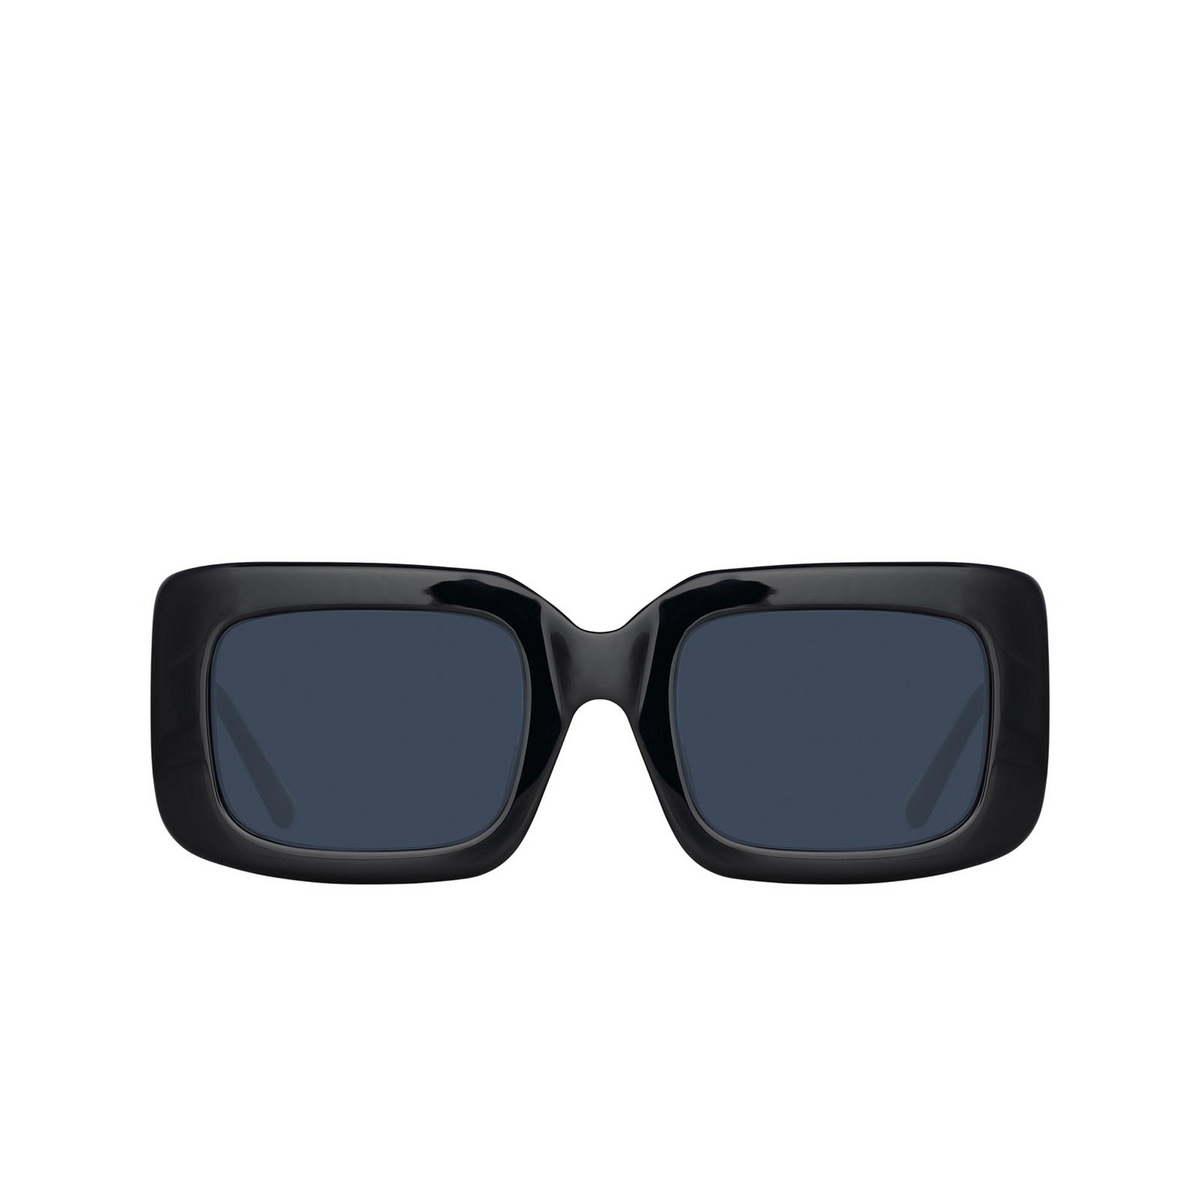 Linda Farrow JORJA Sunglasses 1 Black / Silver - front view